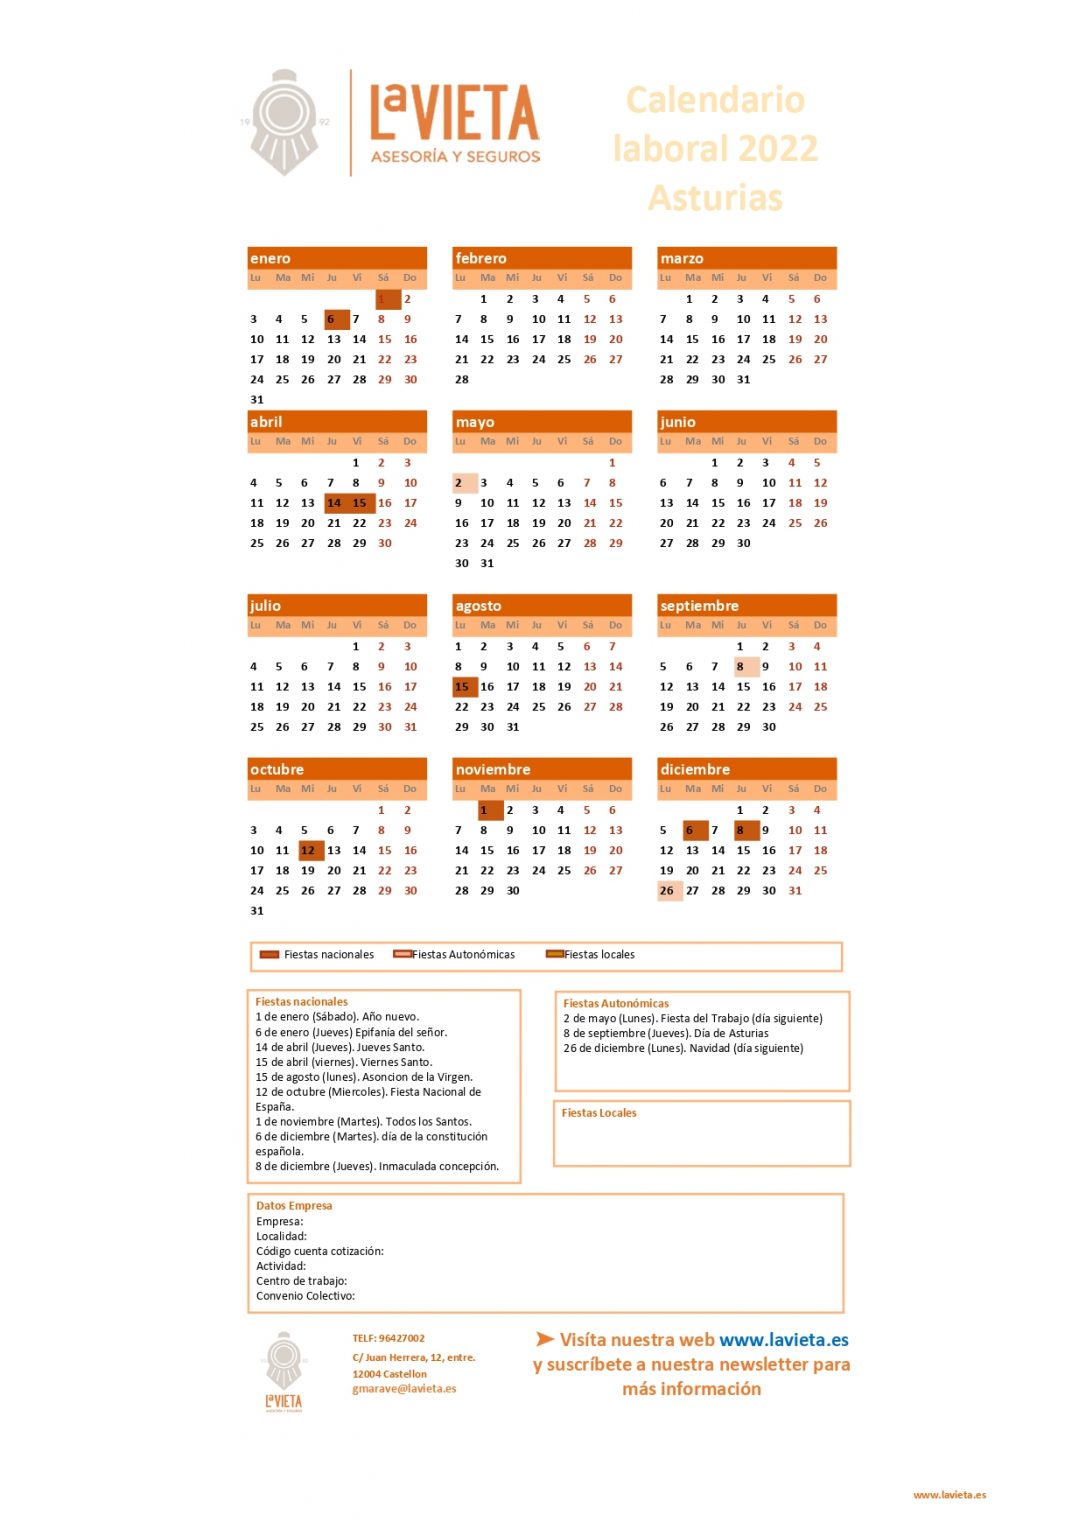 Calendario laboral de Asturias 2022 PDF para imprimir descargable